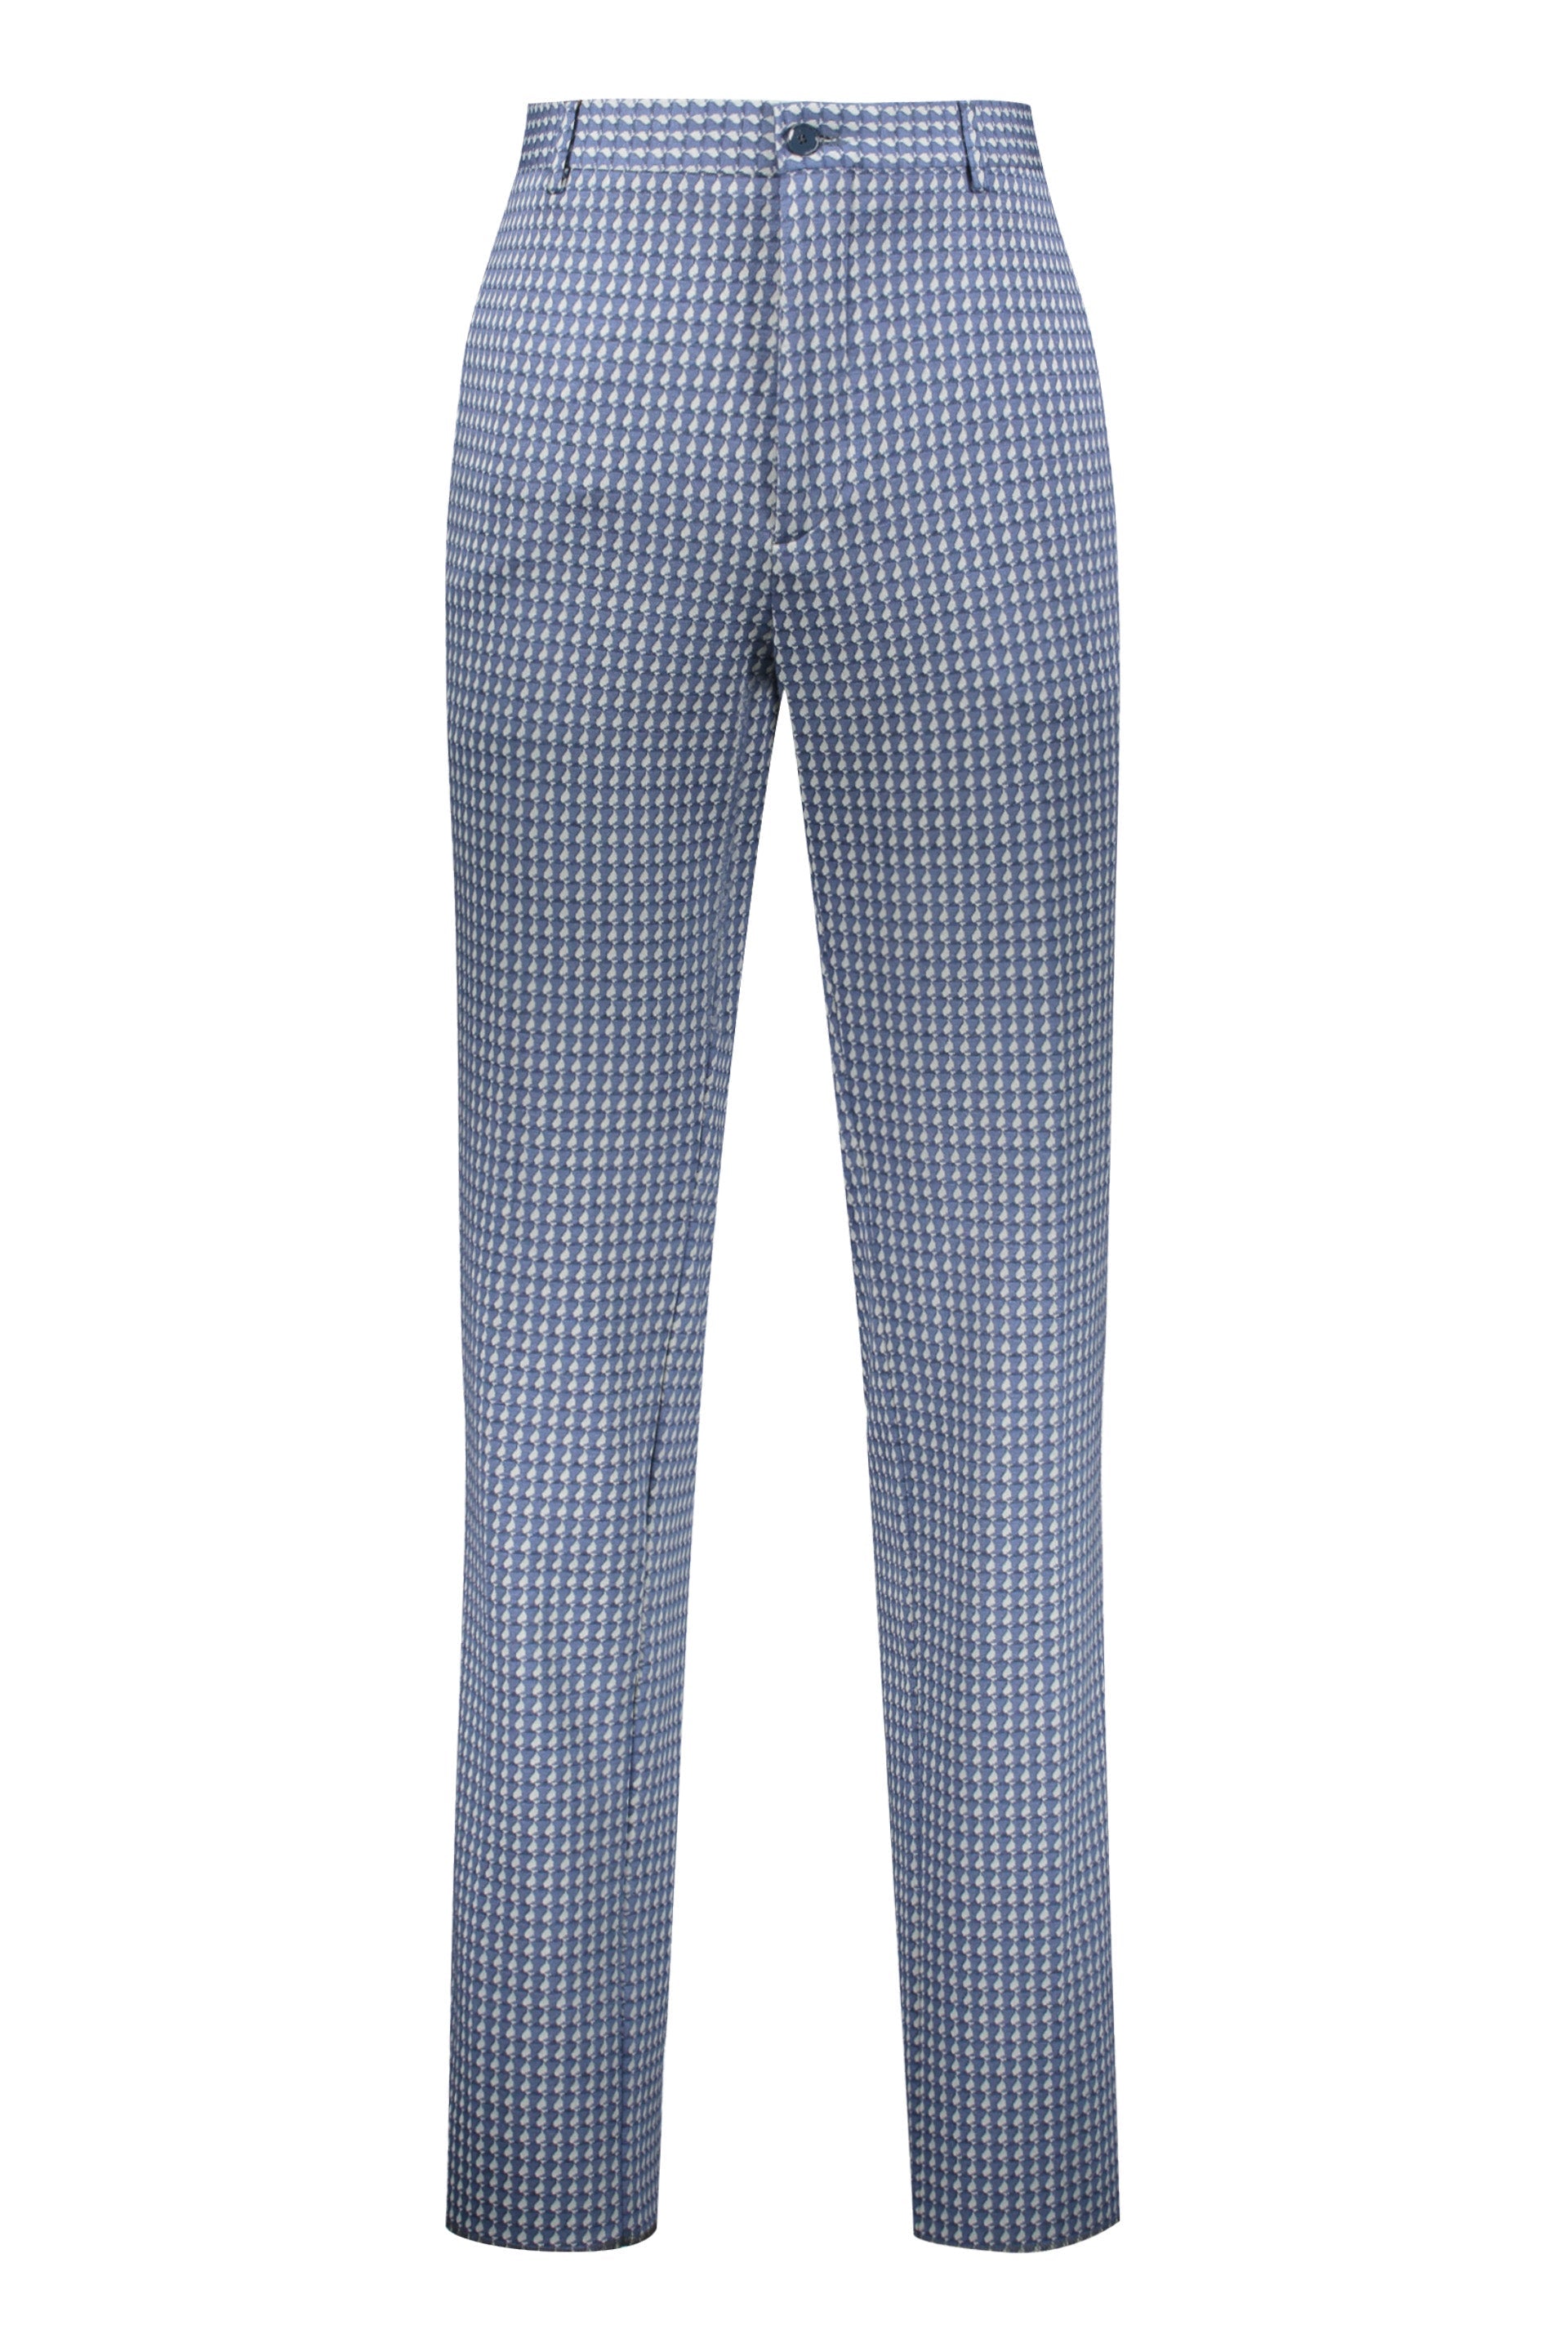 Jacquard motif trousers